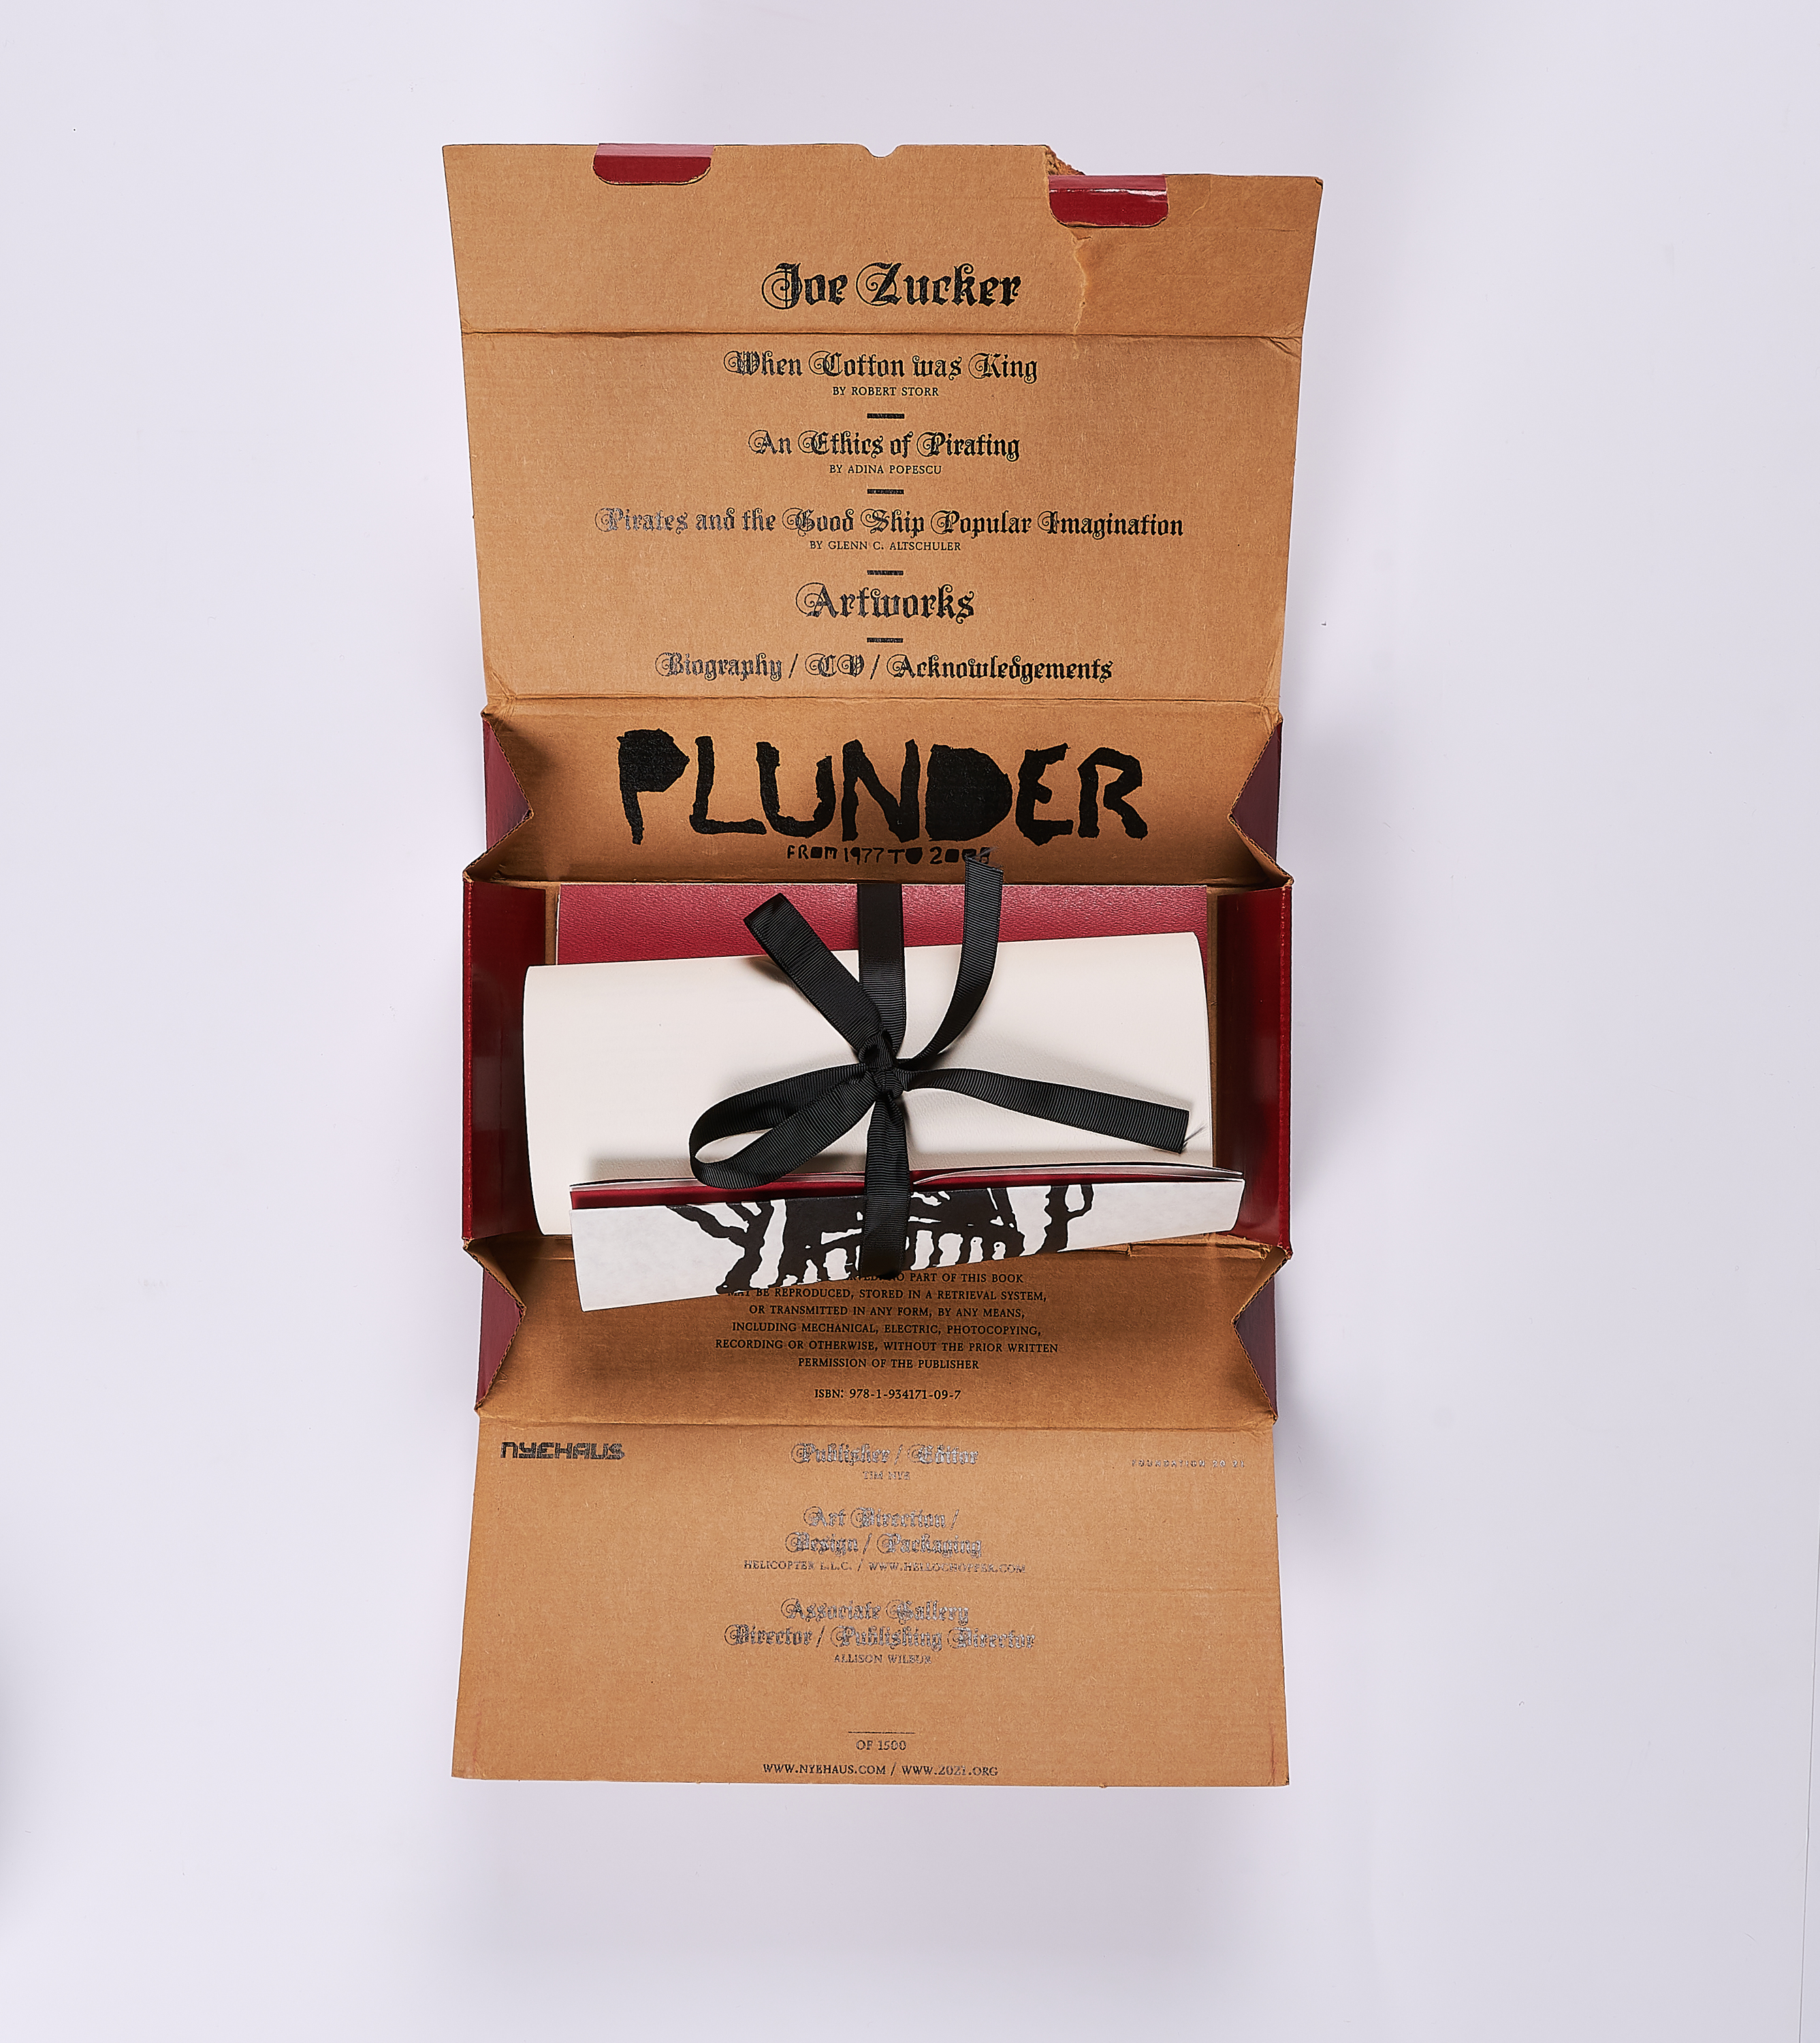 Joe Zucker - Plunder From 1977 to 2008, 68003-846, Van Ham Kunstauktionen